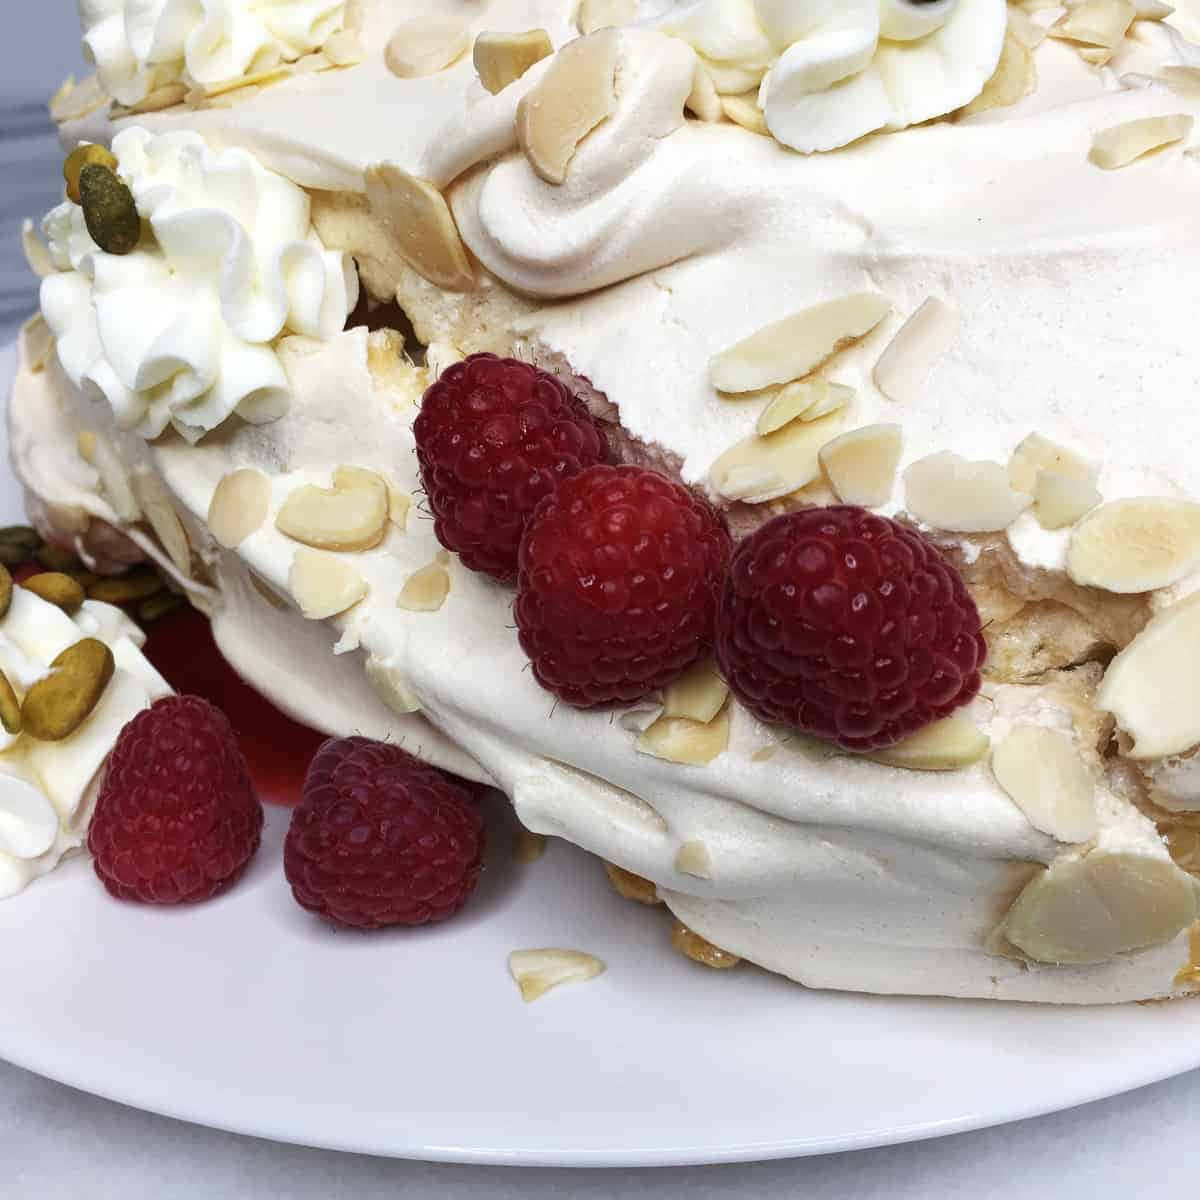 A delicious homemade meringue dessert Wallpaper